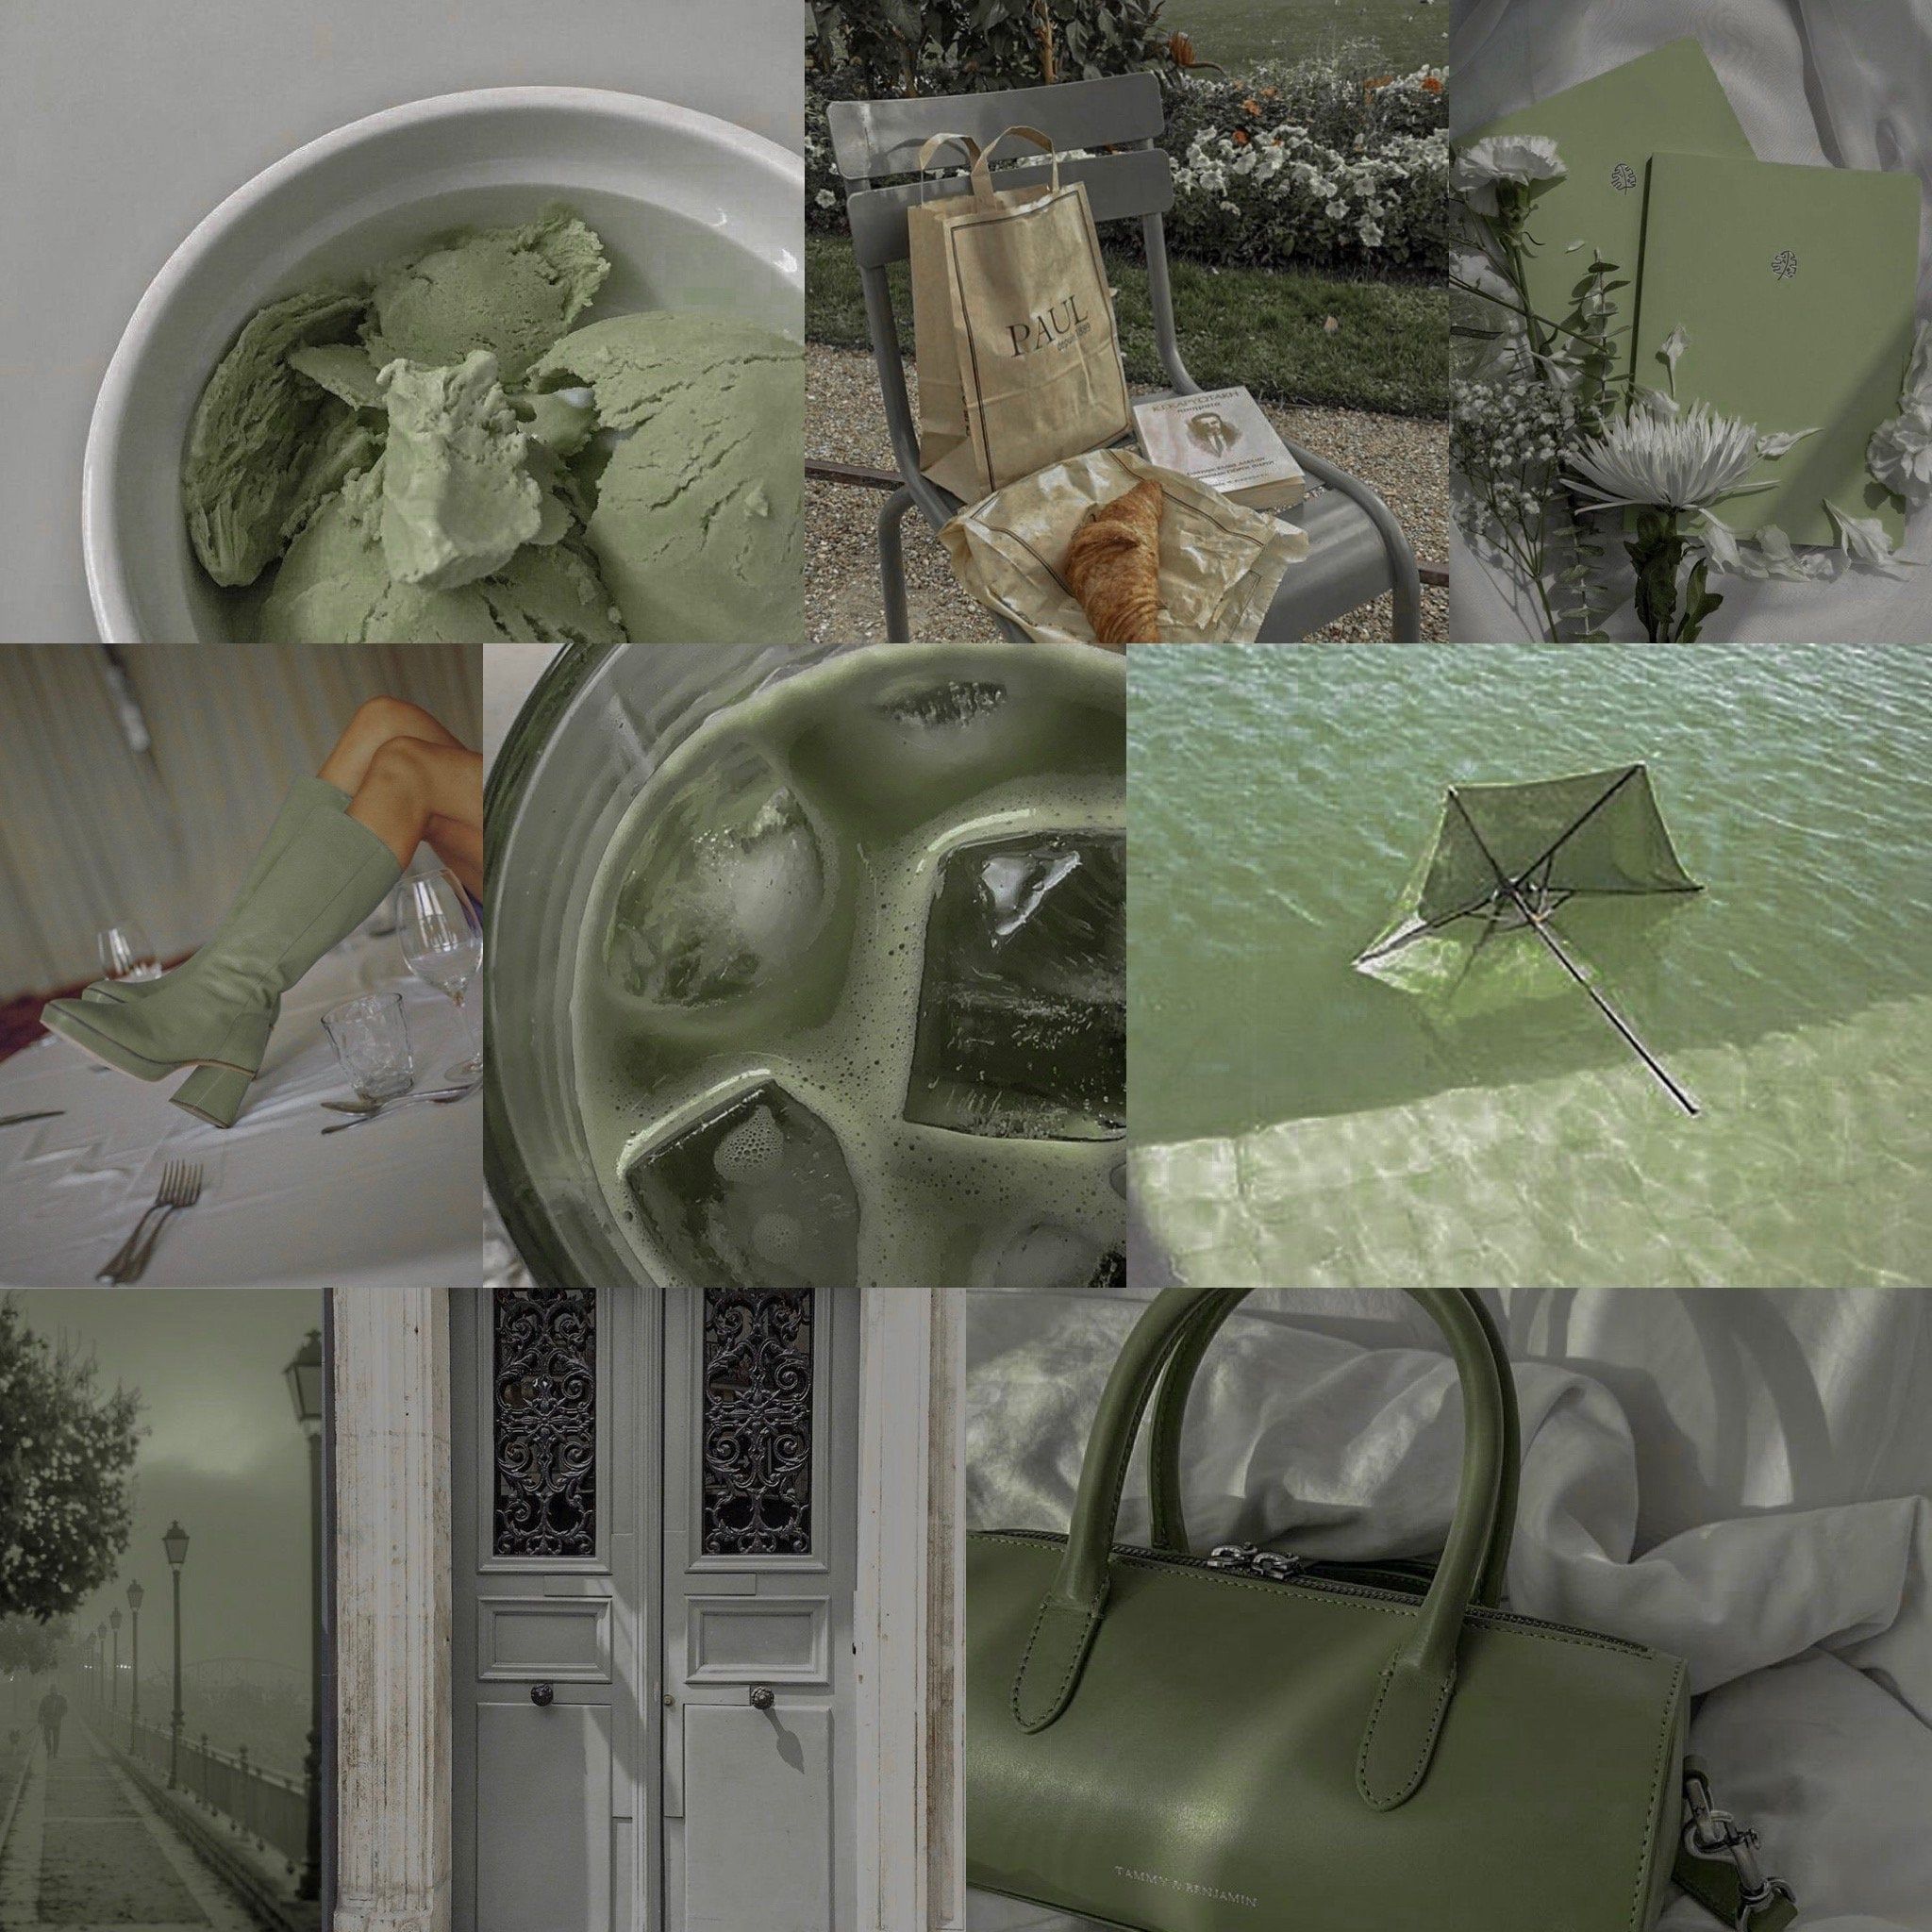 A collage of photos in a green aesthetic, including a handbag, a bowl of ice cream, and a garden. - Soft green, light green